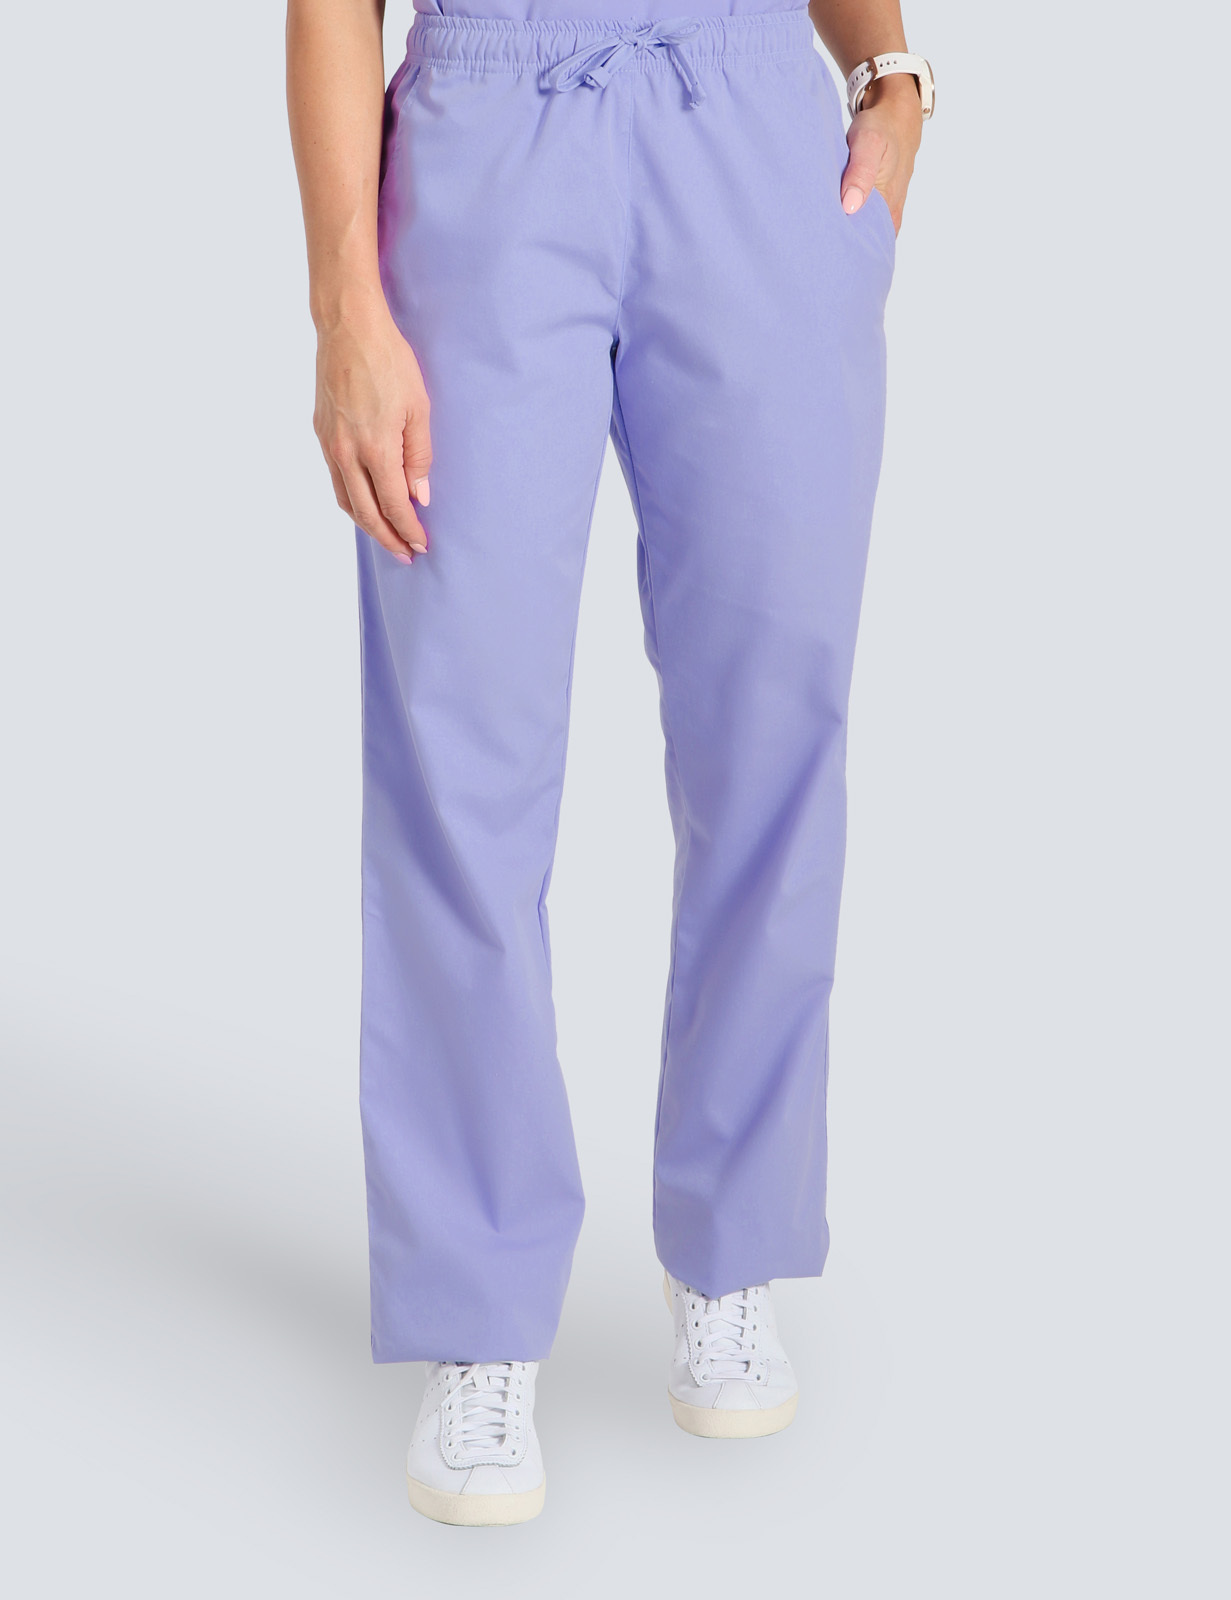 Women's Regular Cut Pants - Lilac - 3X Large